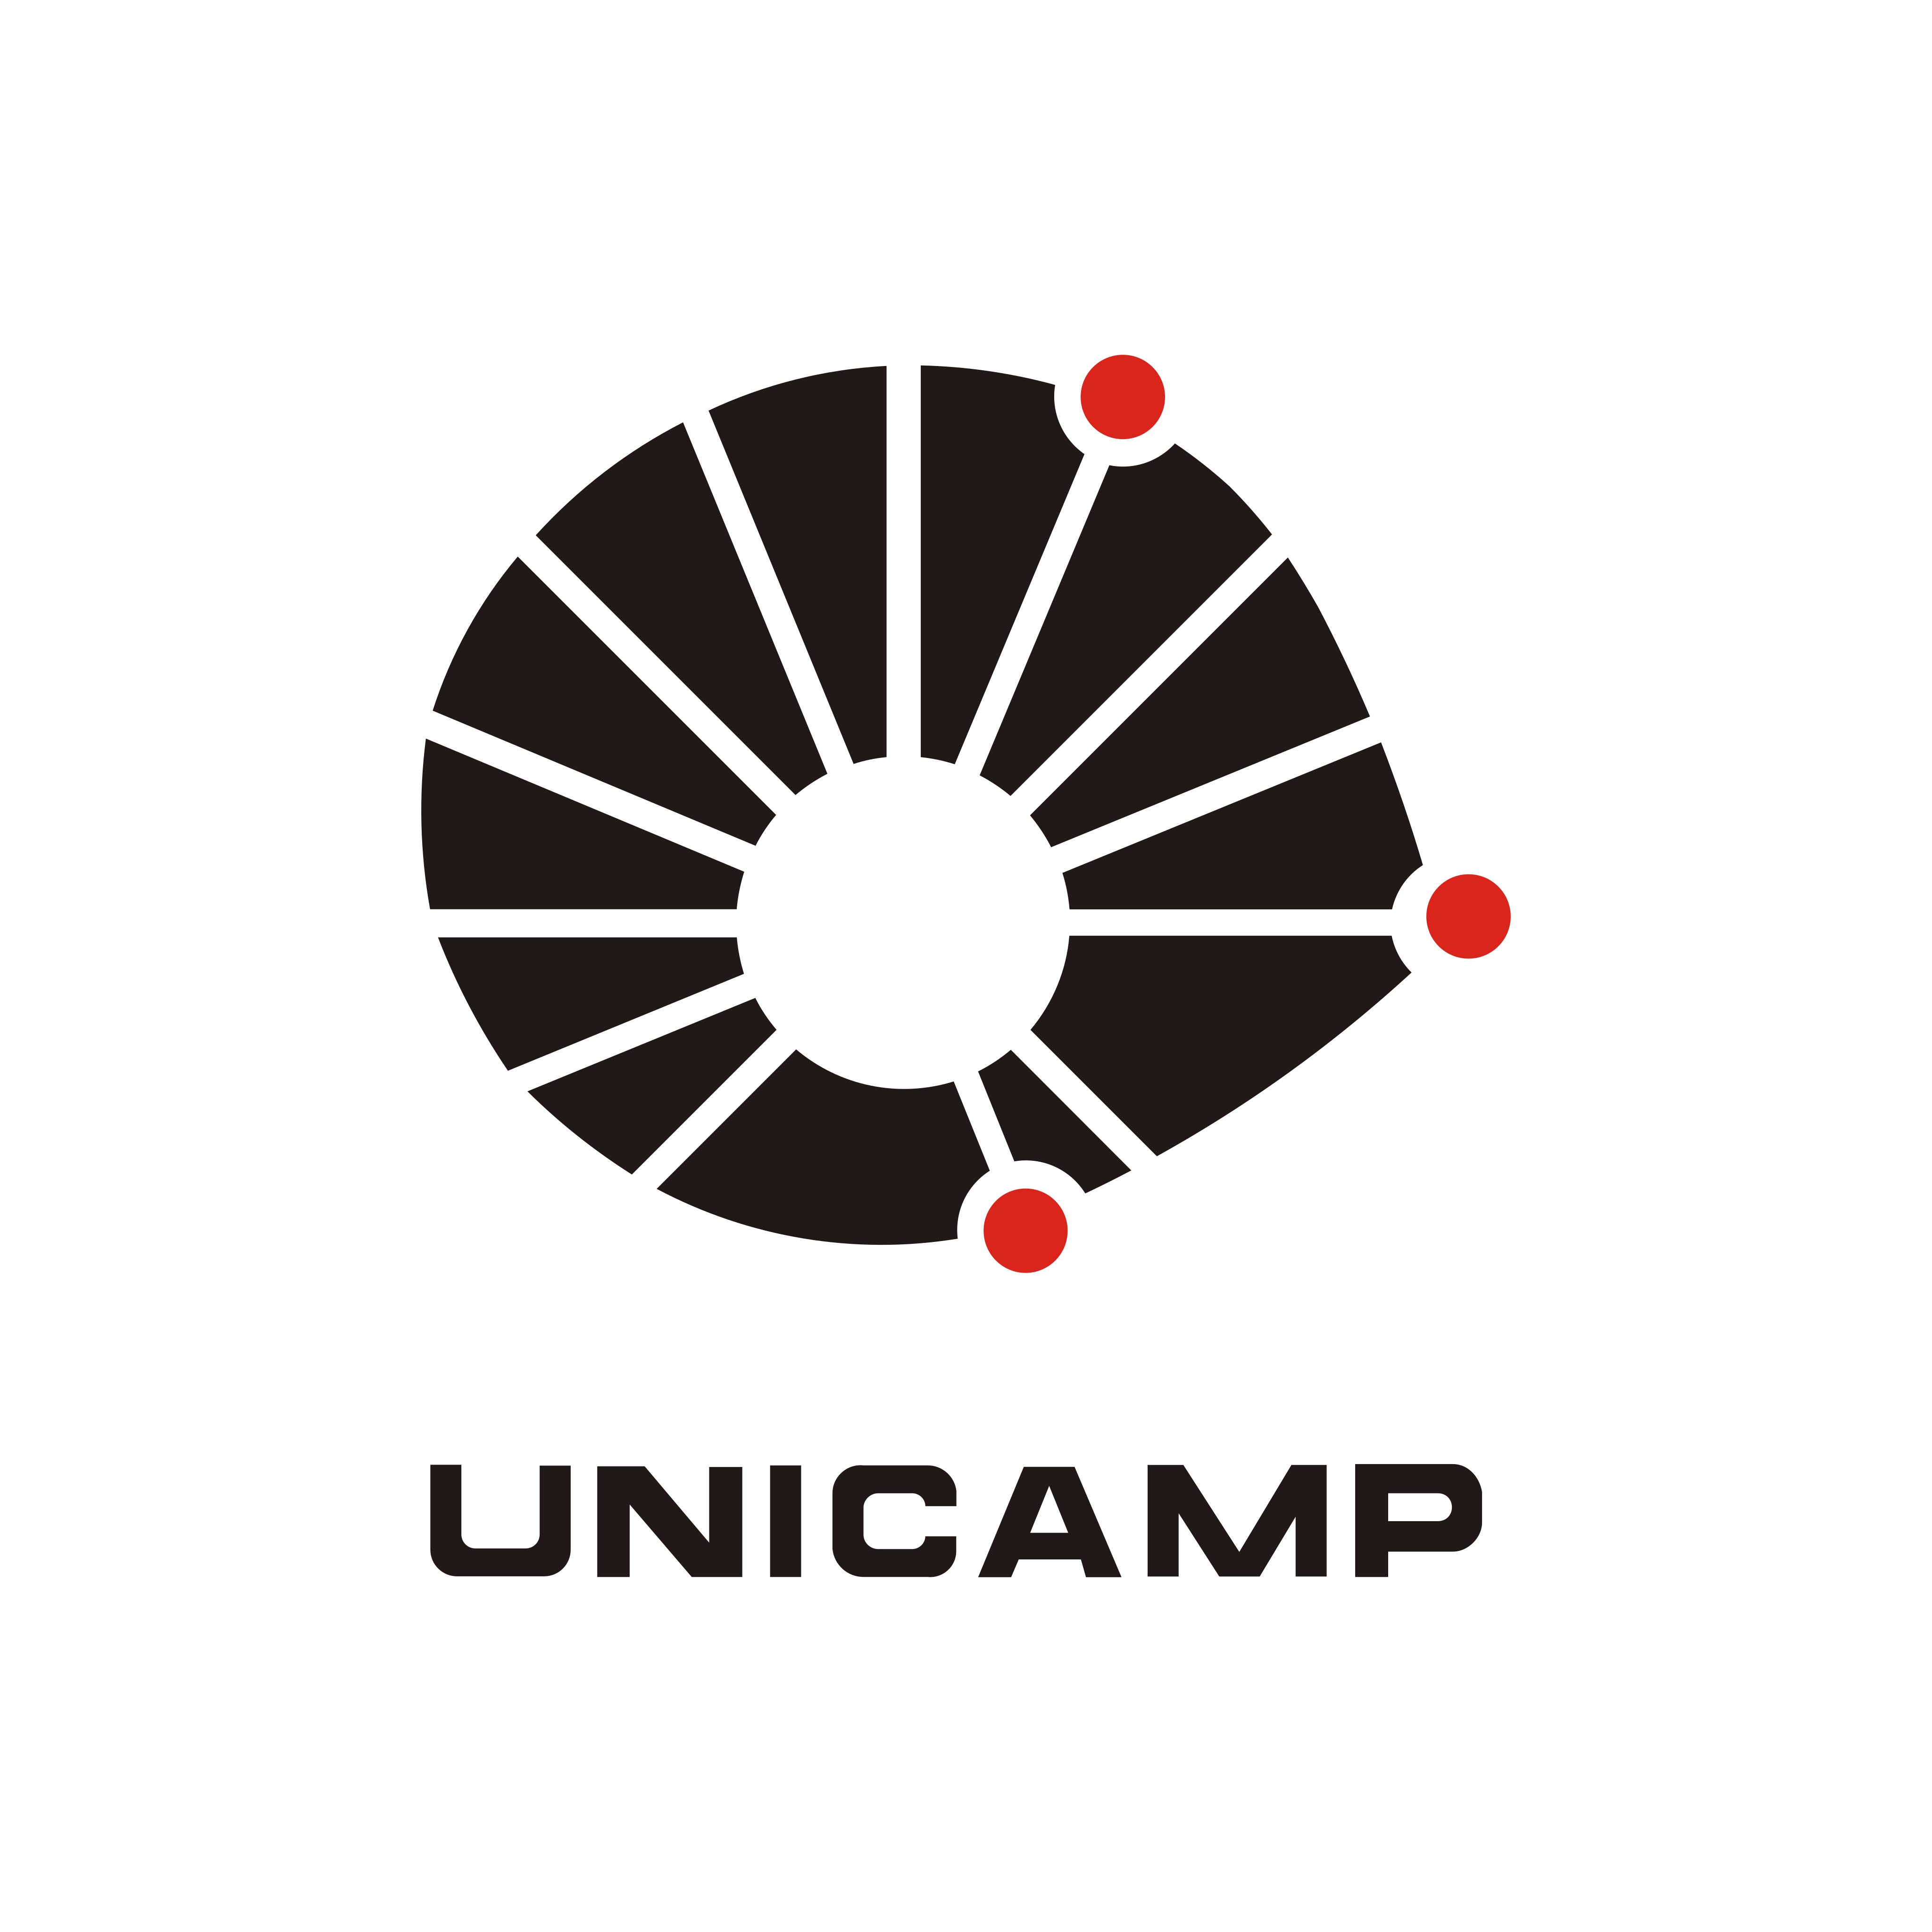 Unicamp Logo PNG.